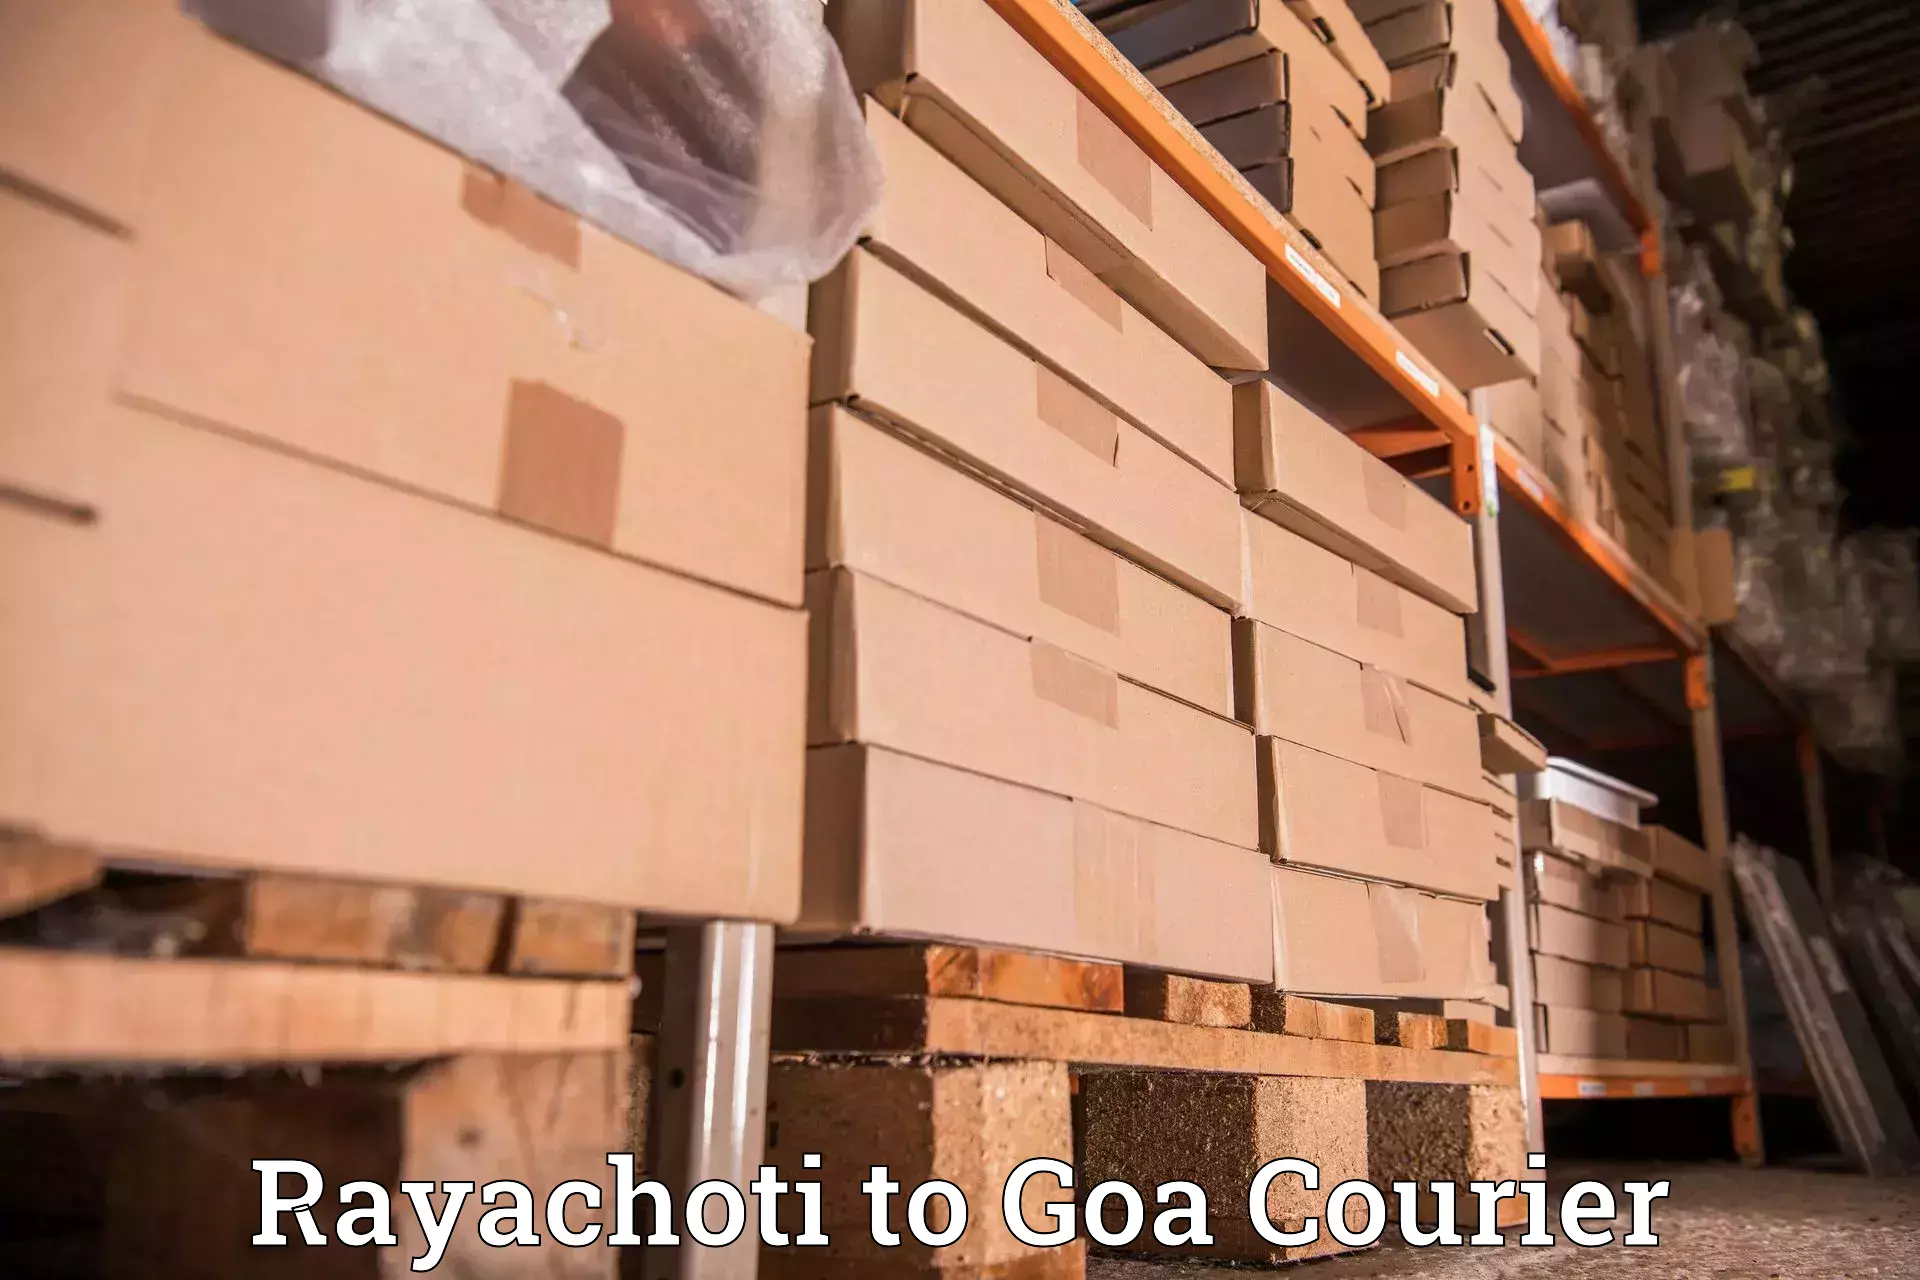 Package delivery network Rayachoti to Panaji